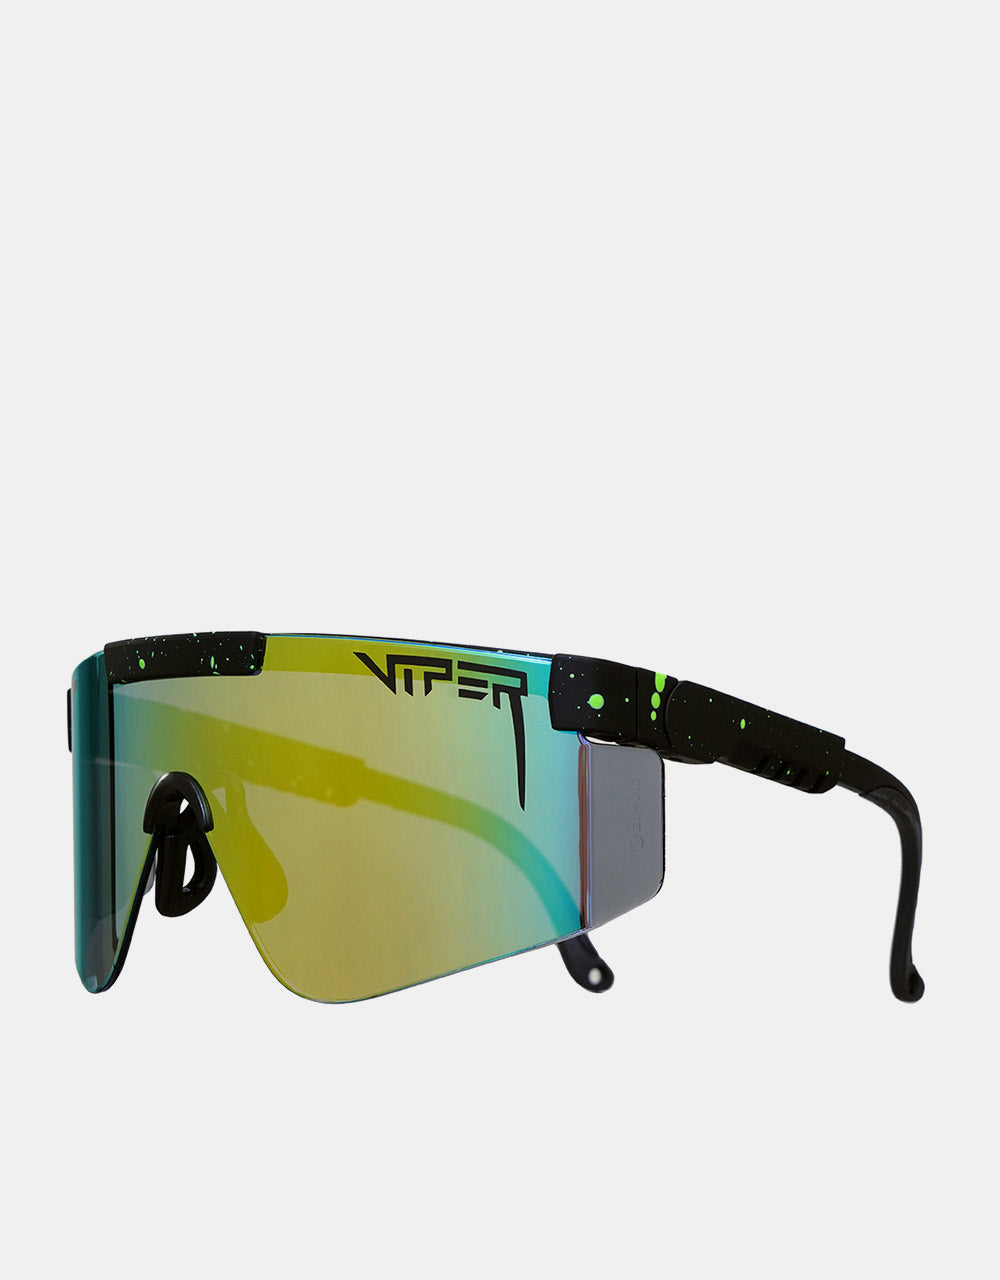 Pit Viper Monster Bull 2000 Z87+ Sunglasses - Rainbow Revo